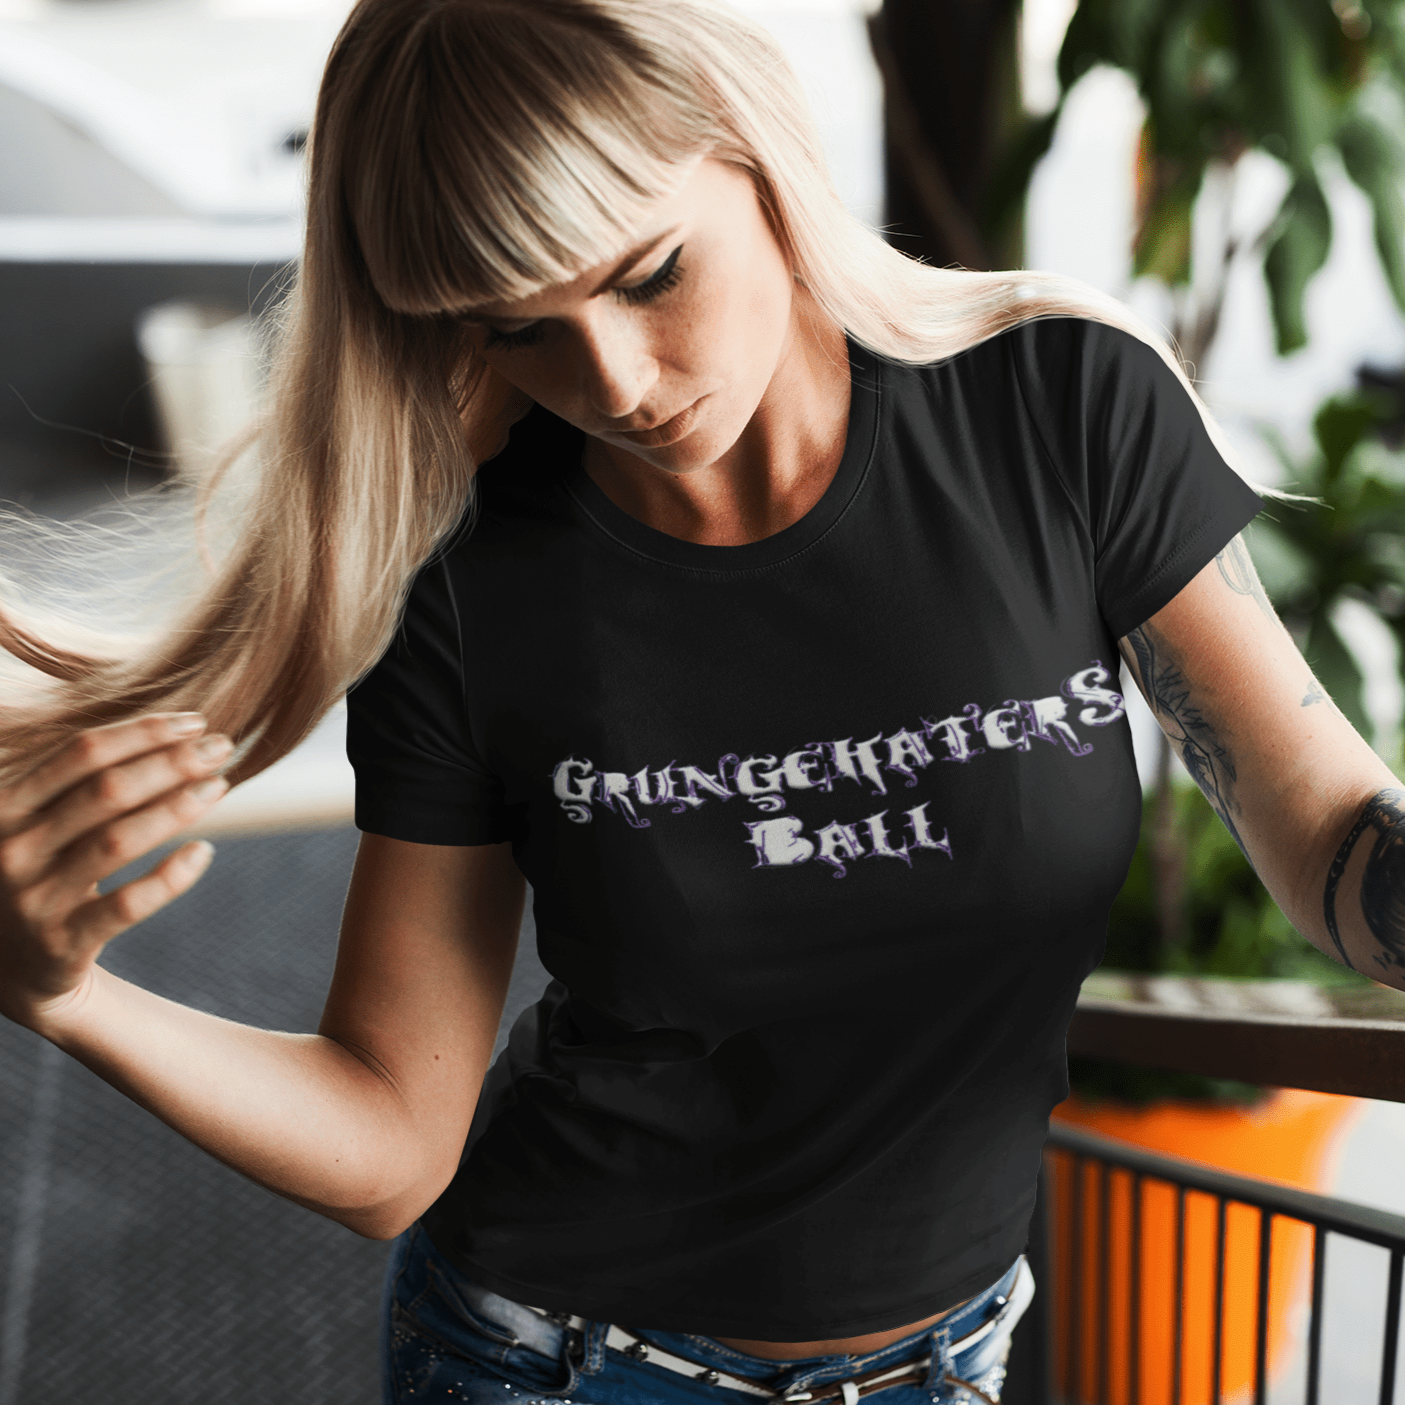 GrungehaterS Ball Unisex T-Shirt